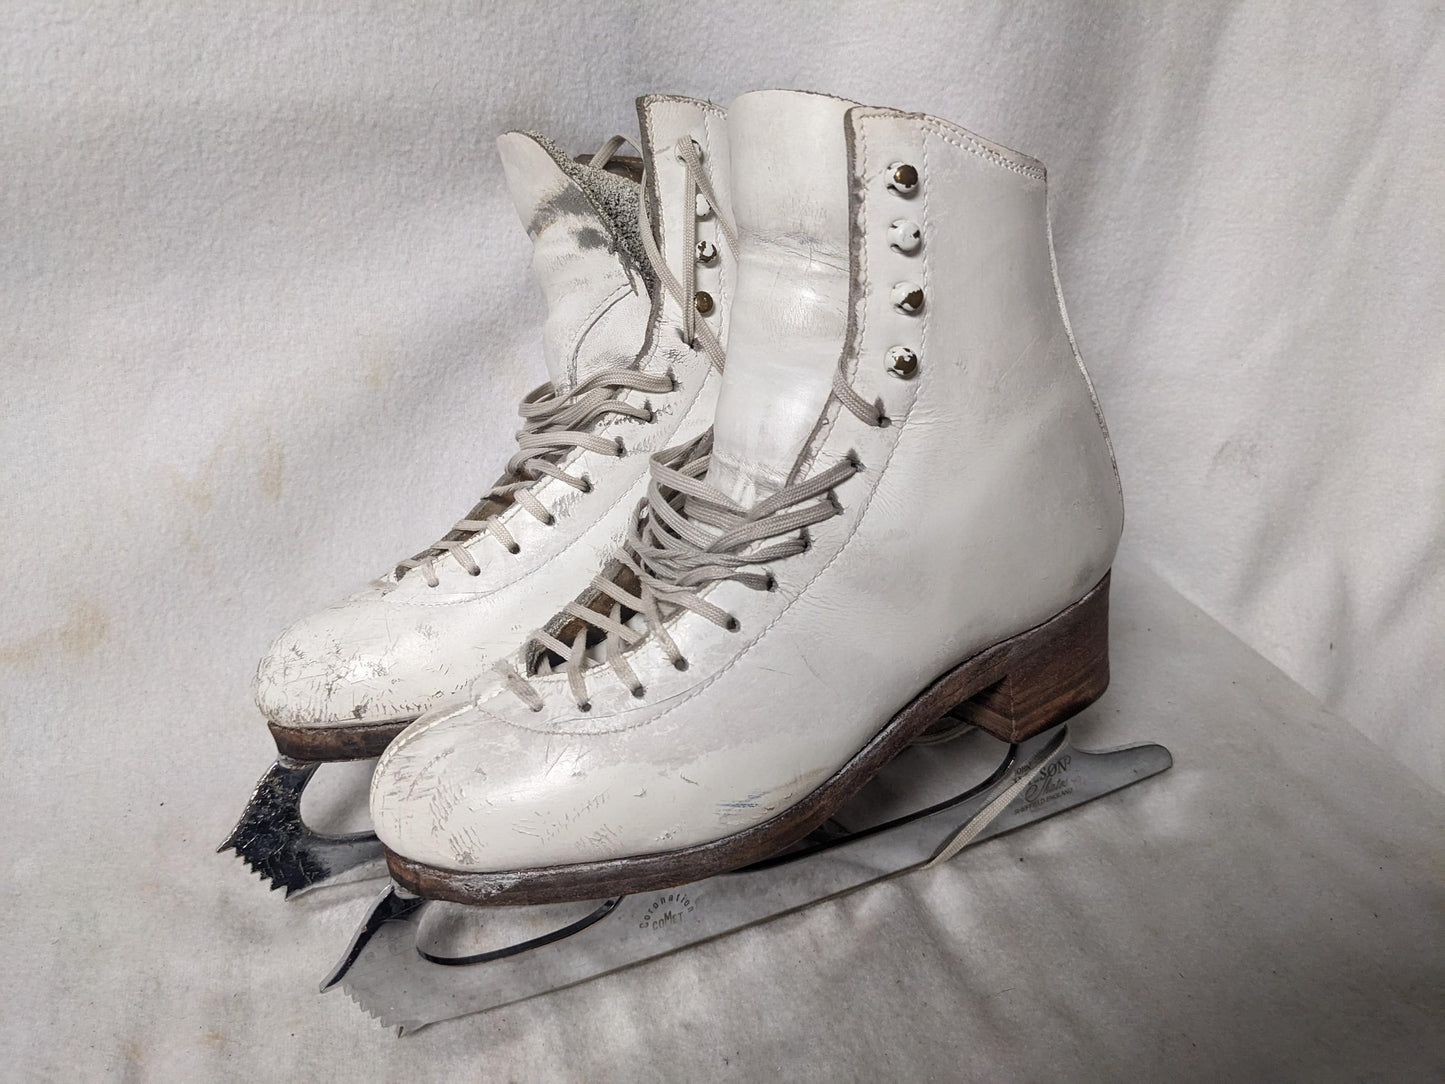 Wilson Skates S.P.Teri Figure Ice Skates Size 3 Color White Condition Used